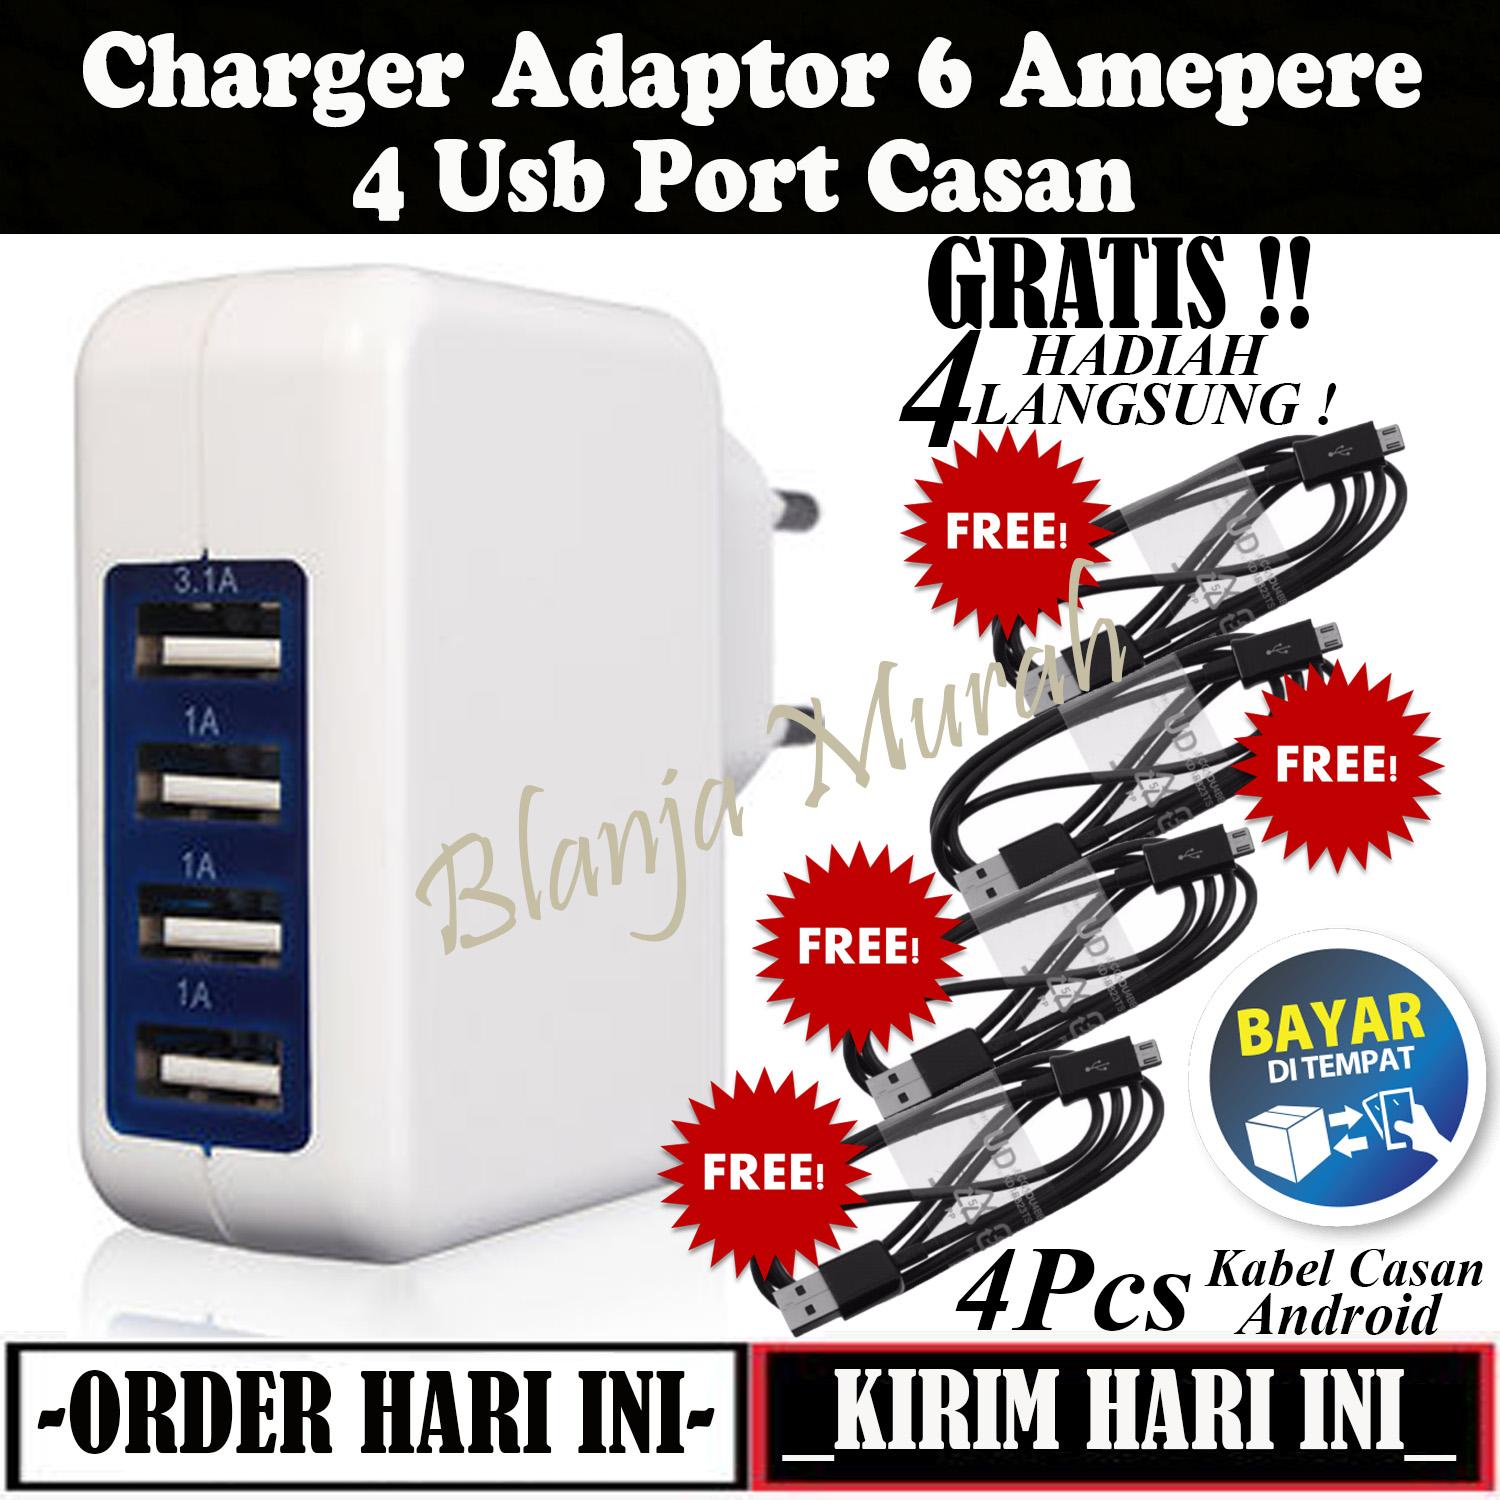 Charger Adaptor 4 Port USB Casan 6 Ampere - GRATIS 4Pcs Kabel Charger Casan Android Smartphone